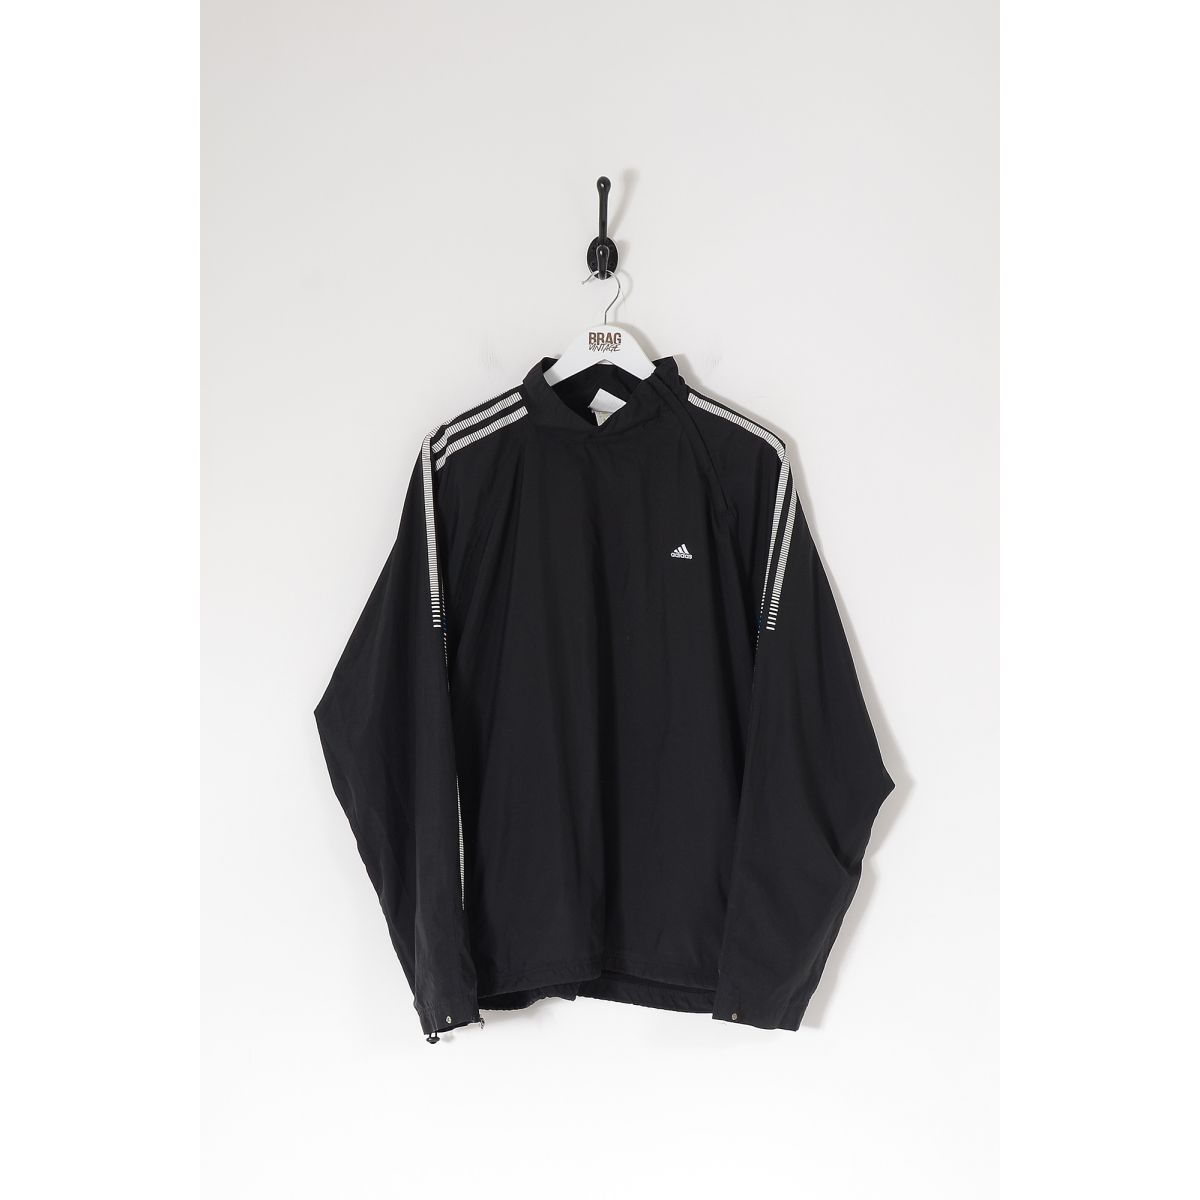 Vintage ADIDAS Pullover Sports Jacket Black Large